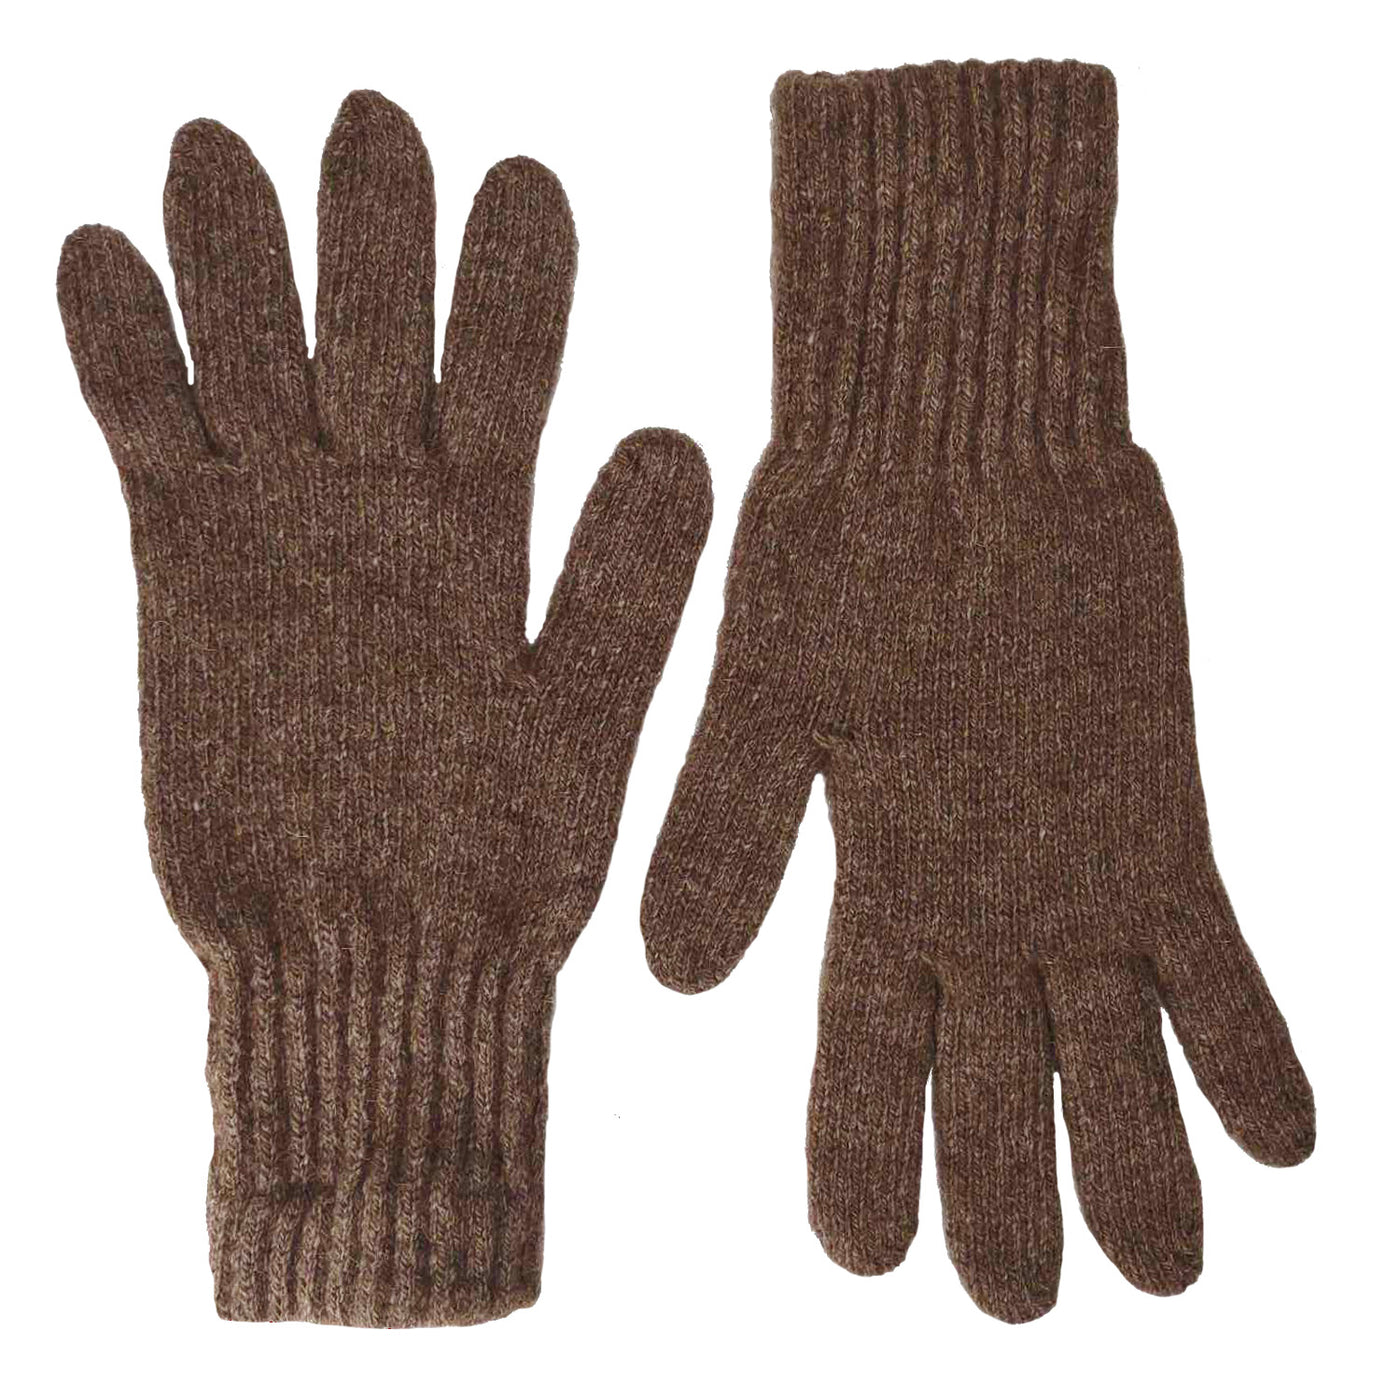 Advantage Gloves X-Large